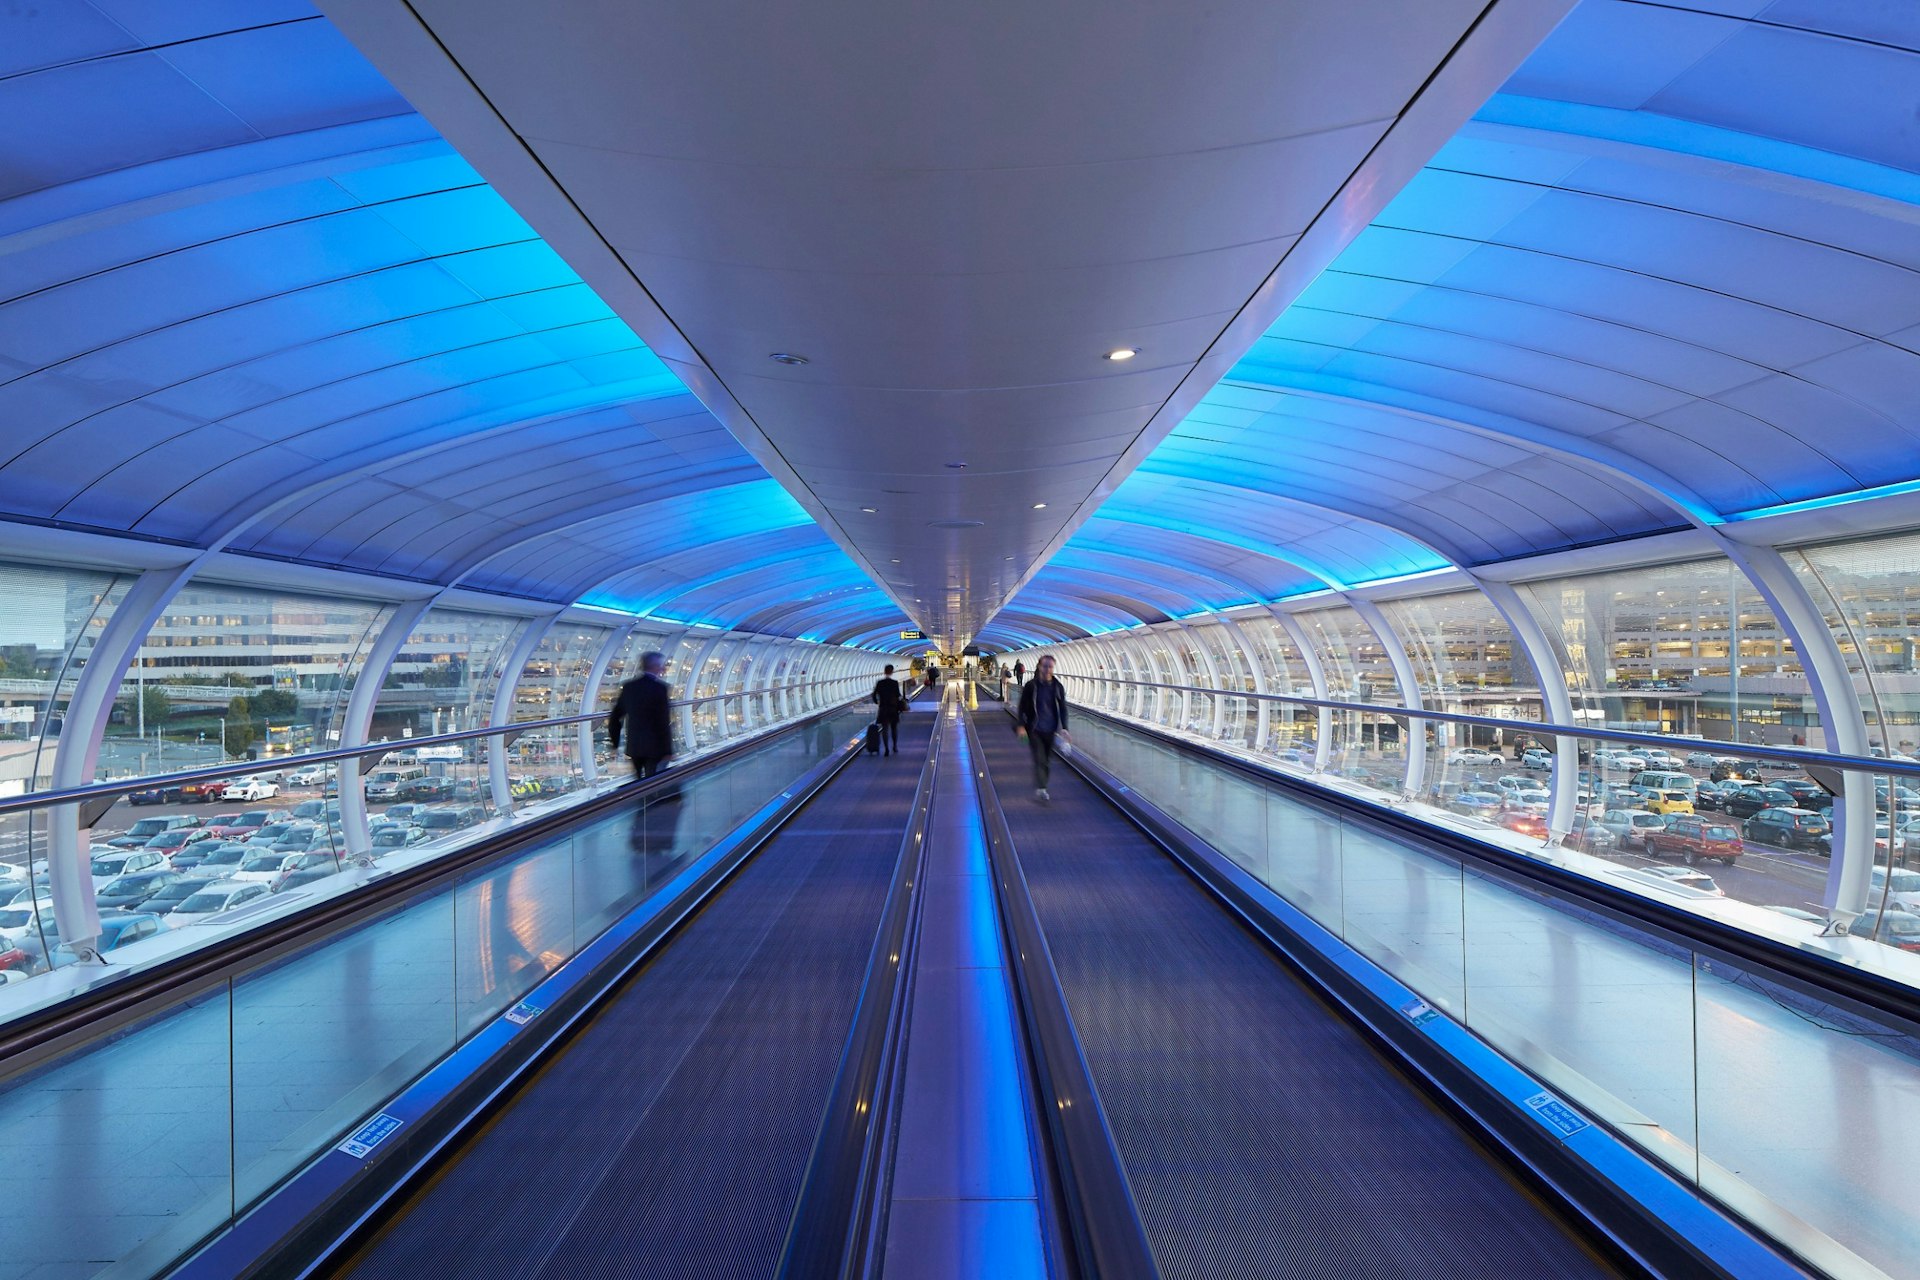 The illuminated Skyywalk at Manchester Airport